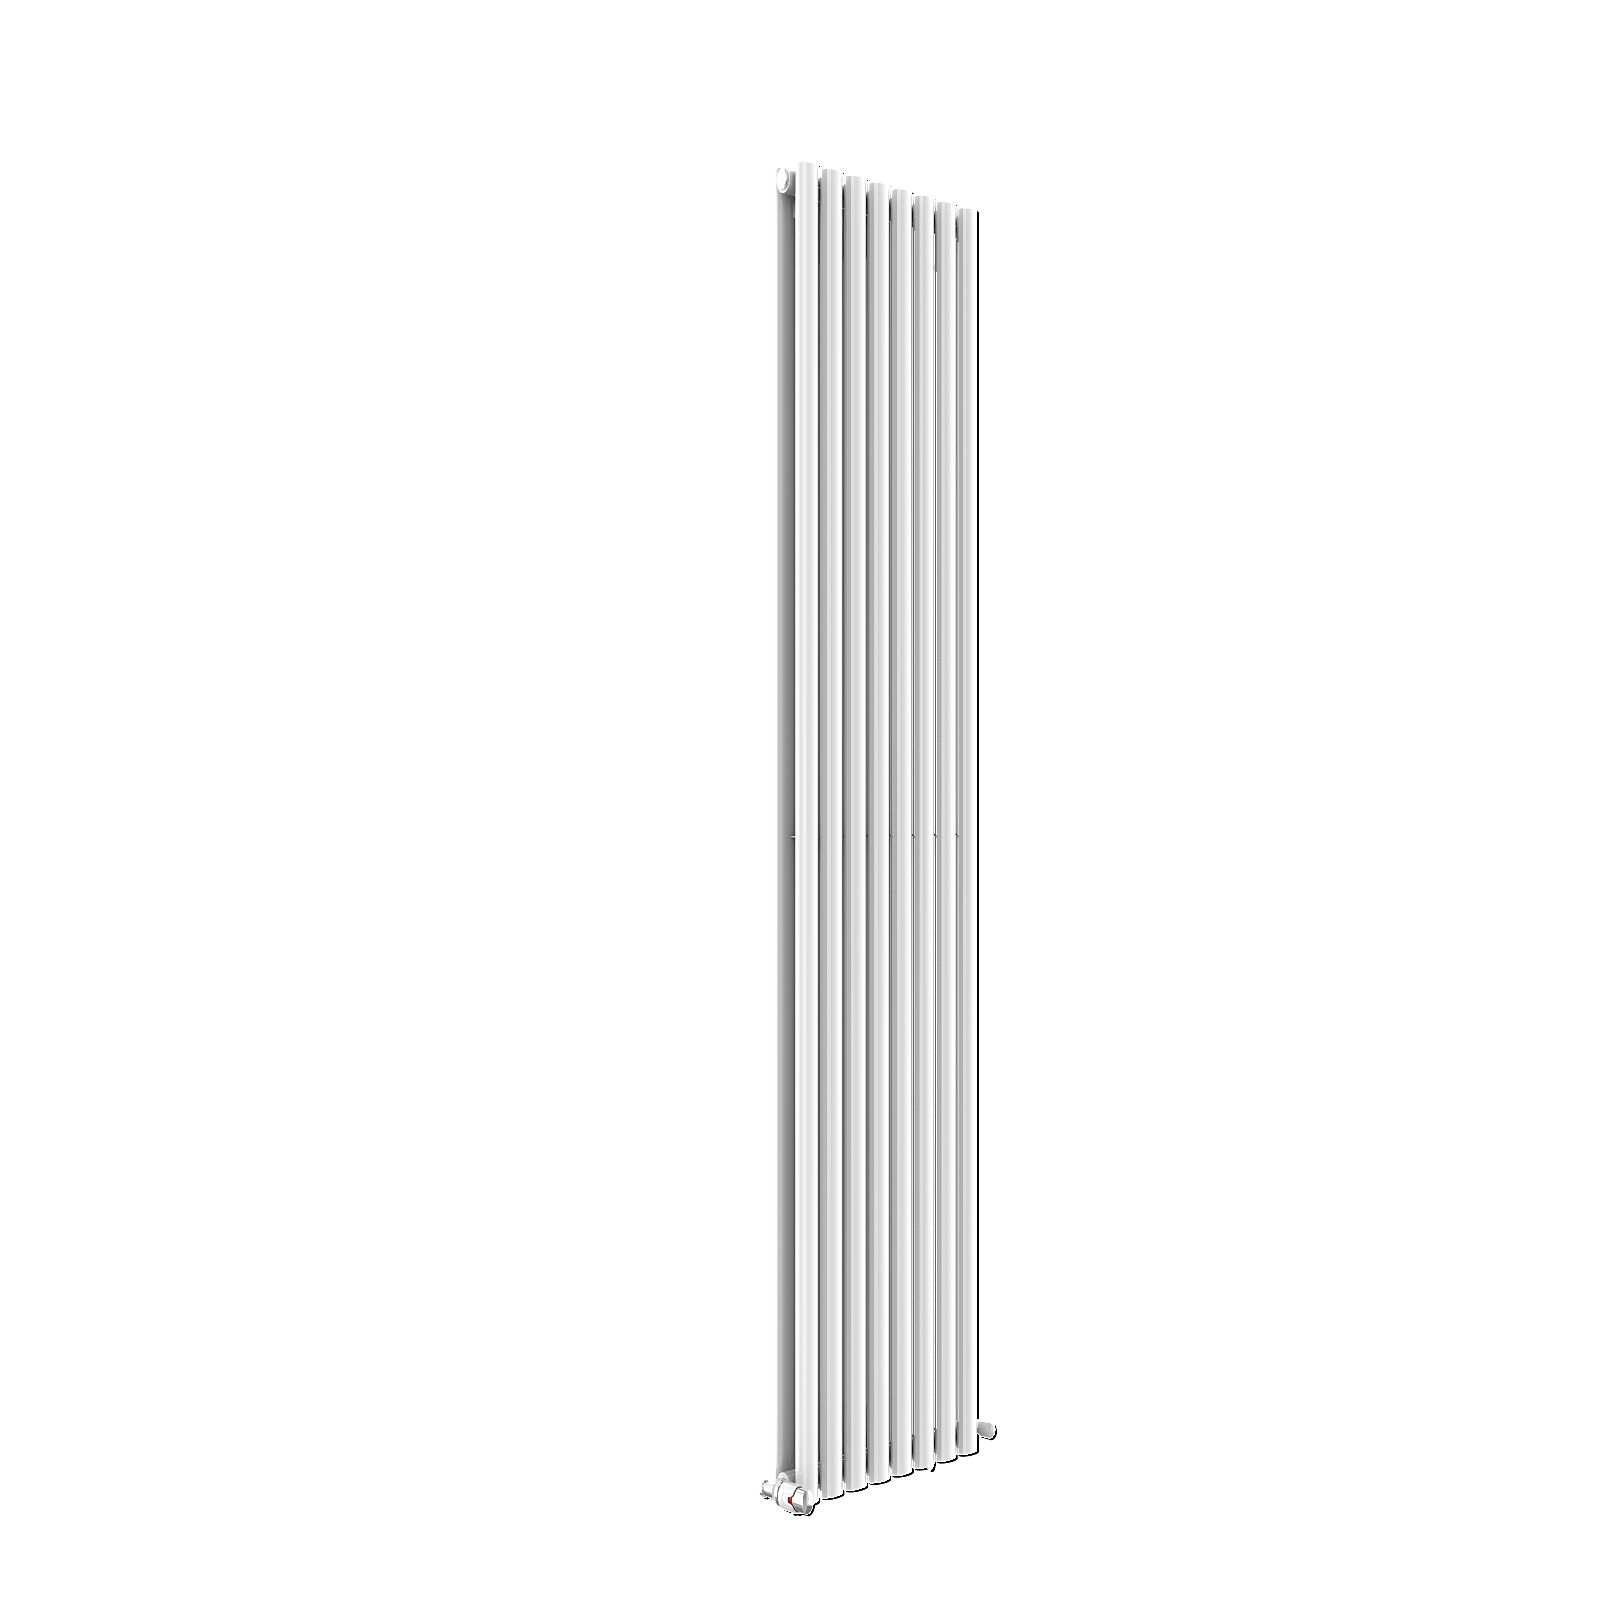 Photo of Vurtu2 Vertical Double Panel Radiator 1600mm X 480mm - White